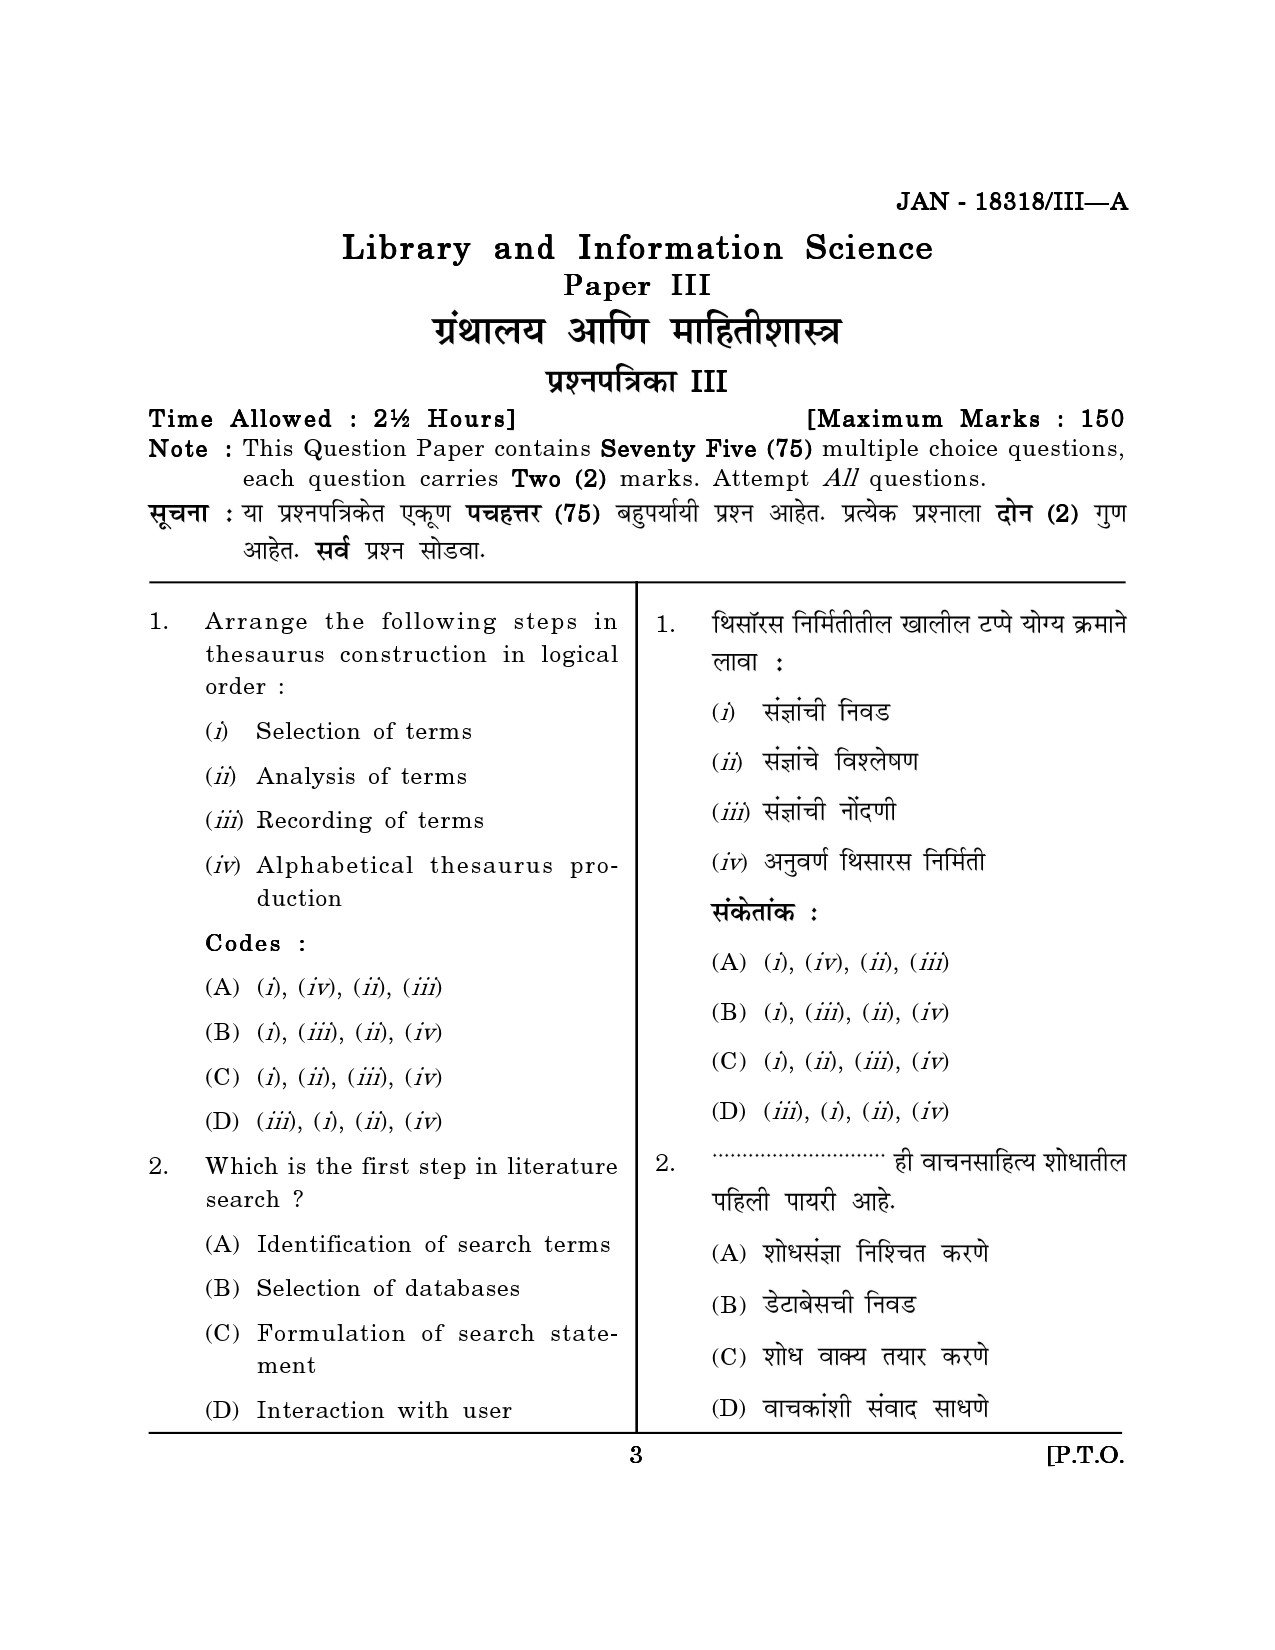 Maharashtra SET Library Information Science Question Paper III January 2018 2